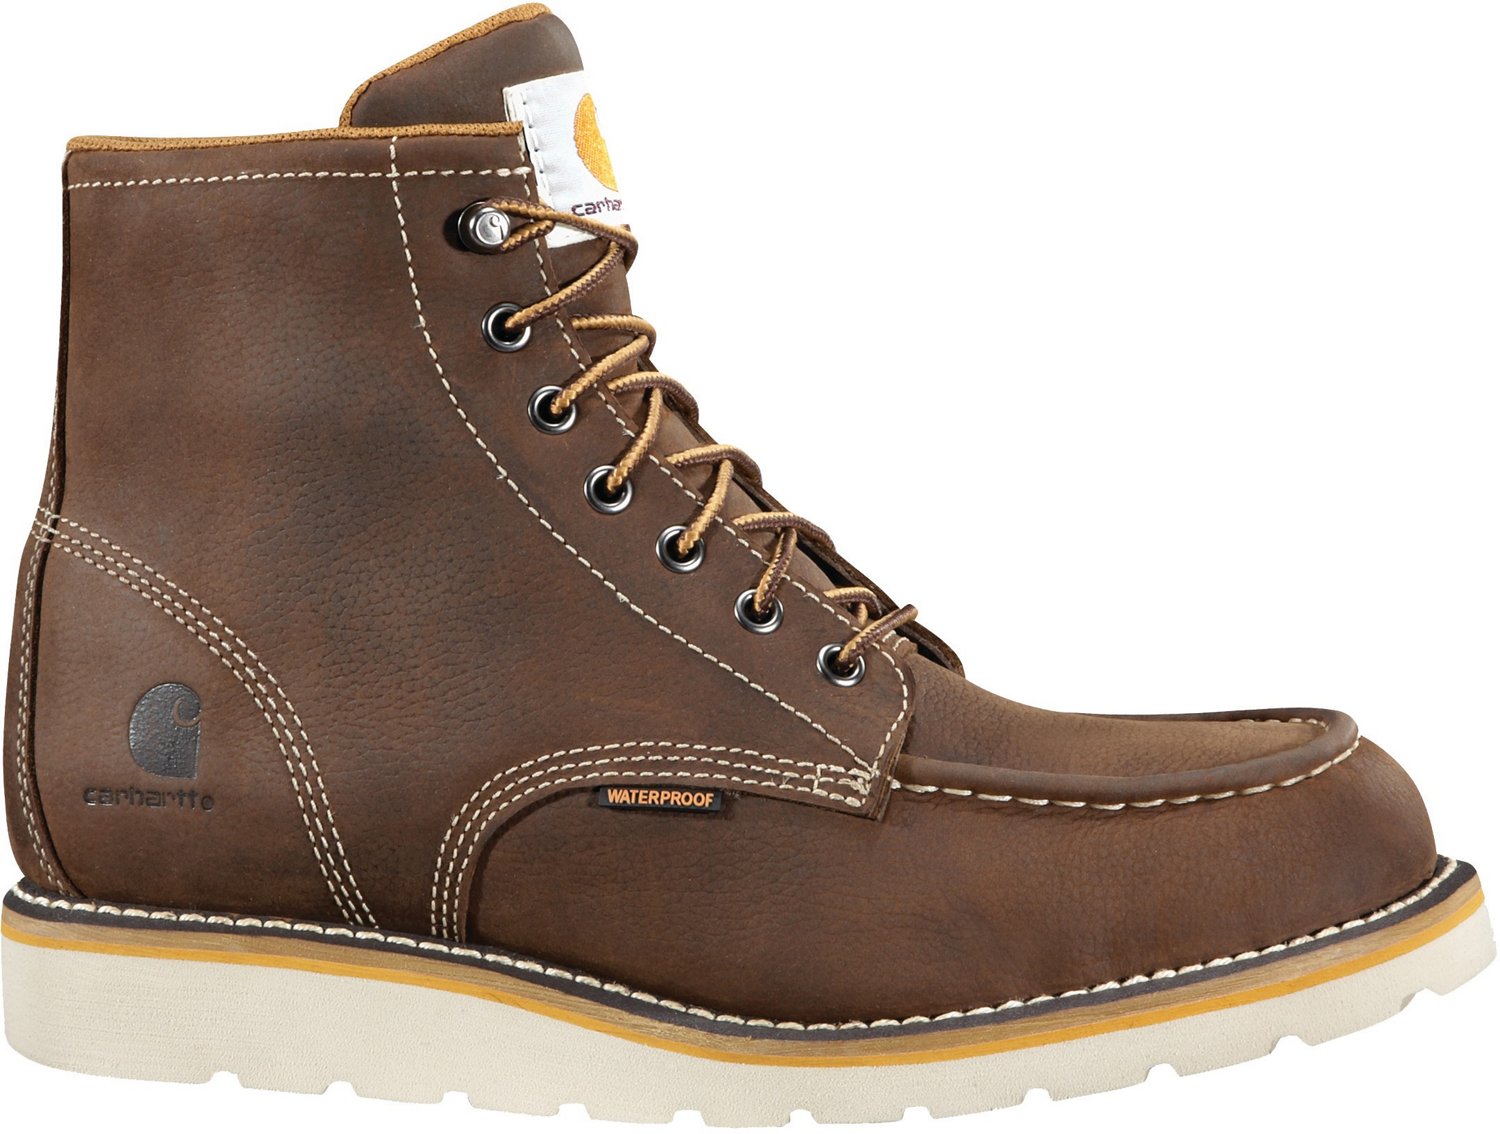 Carhartt Men's Steel Toe Wedge Boots                                                                                             - view number 1 selected